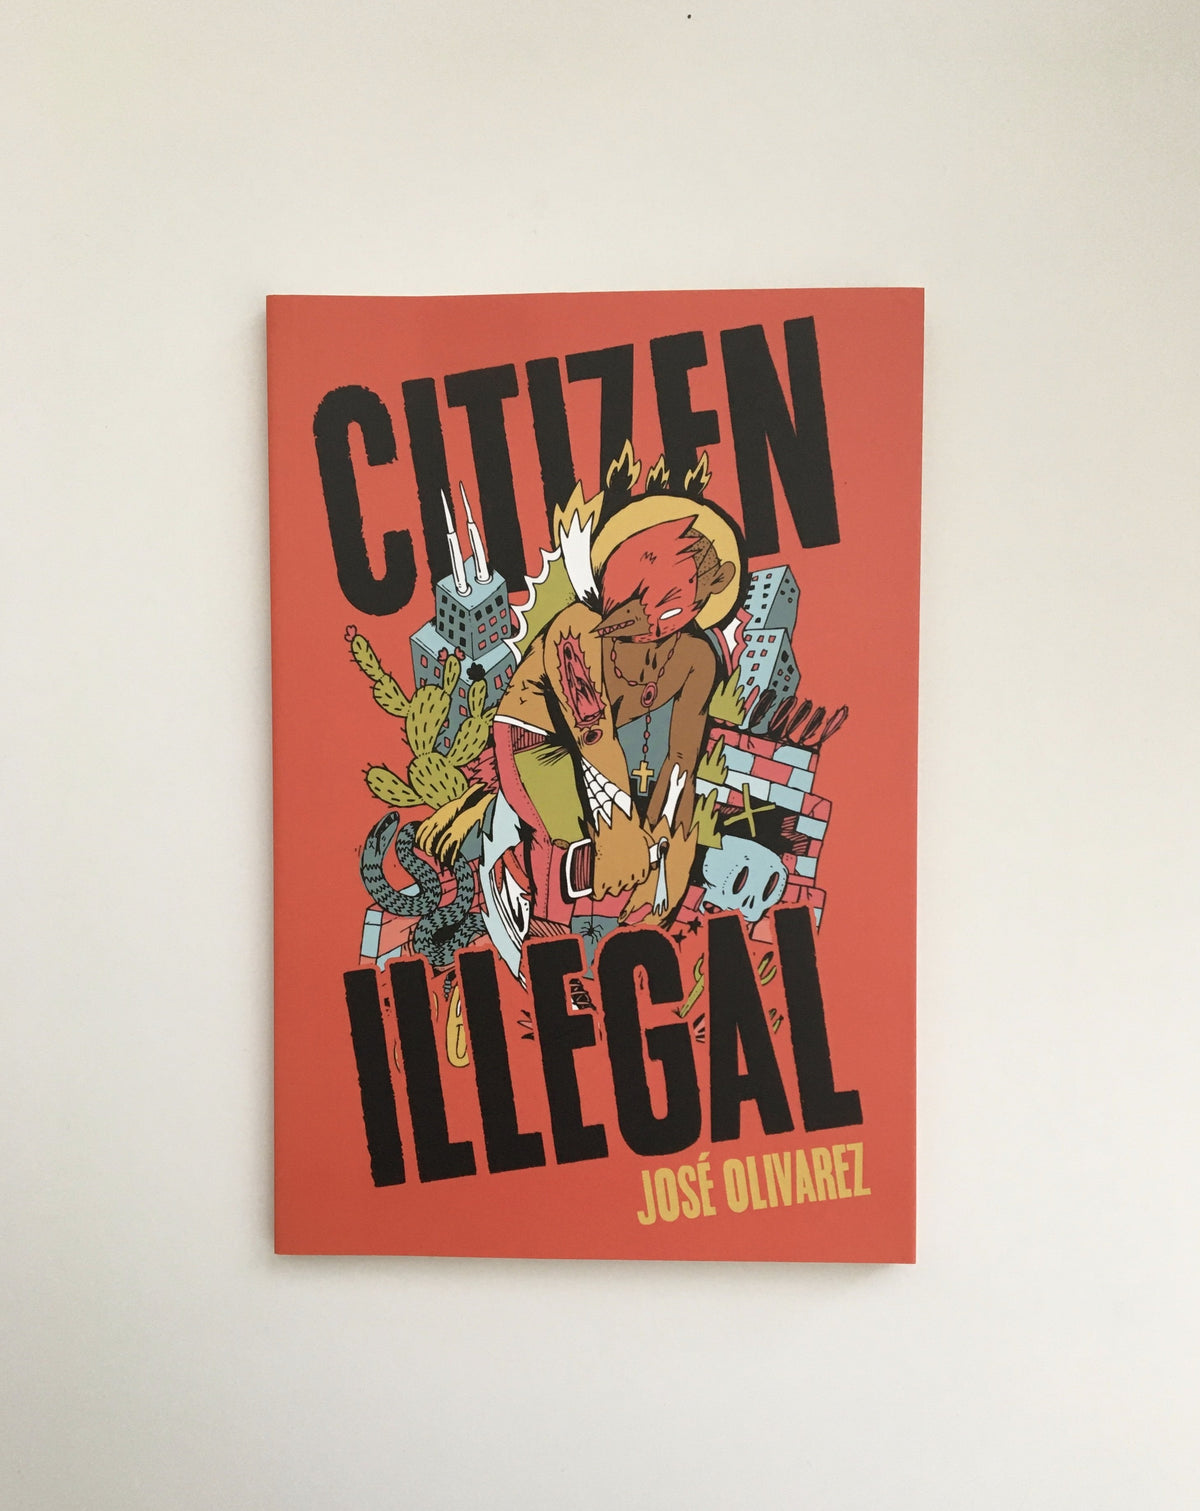 Citizen Illegal by Jose Olivarez, book, Ten Dollar Books, Ten Dollar Books